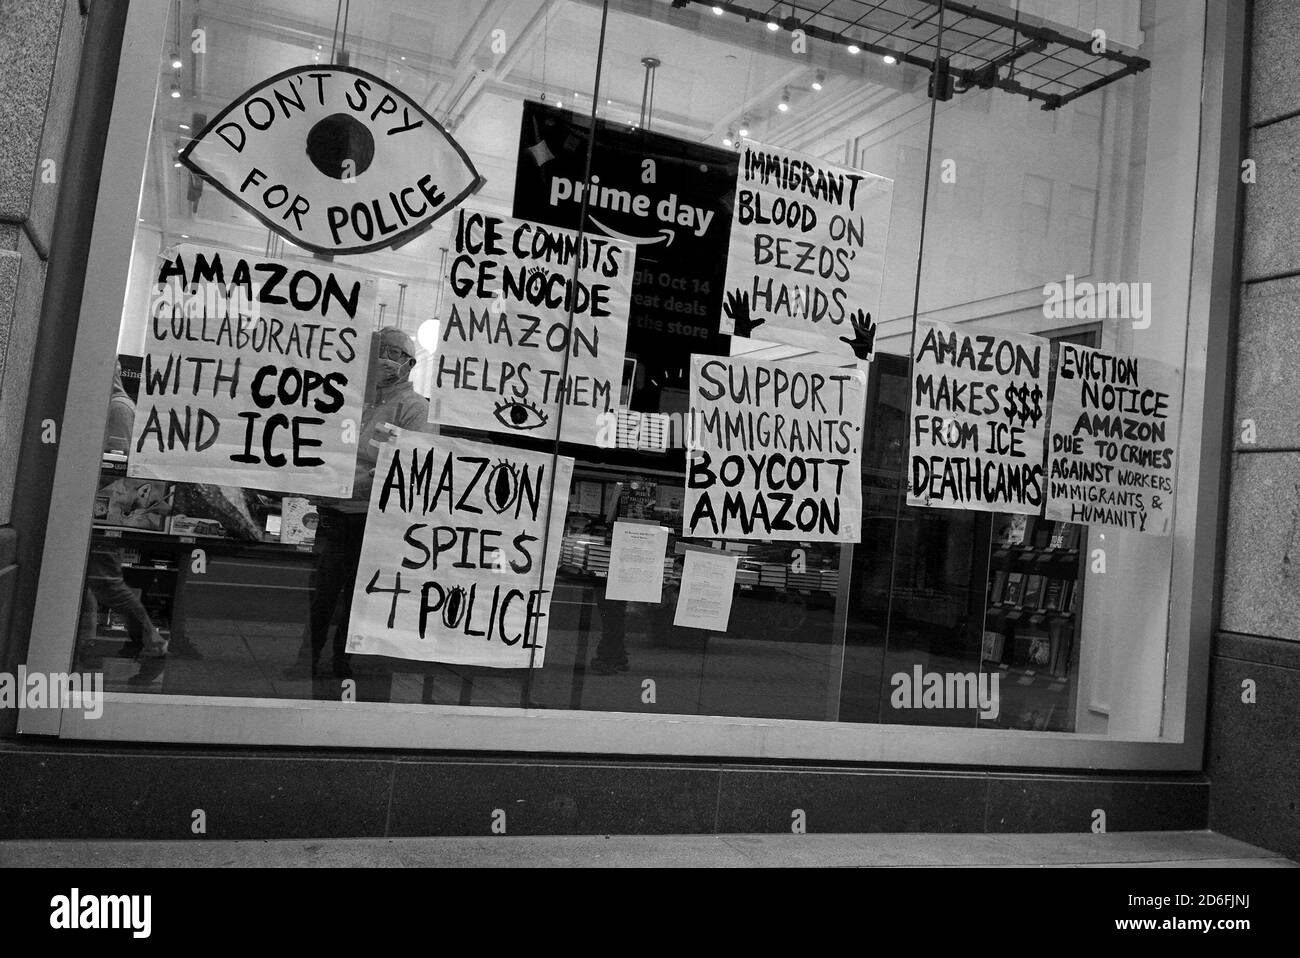 New York, New York, USA. 2nd Oct, 2020. Support immigrants boycott Amazon.  Collaborates with cops and ICE. Credit: John Marshall Mantel/ZUMA  Wire/Alamy Live News Stock Photo - Alamy